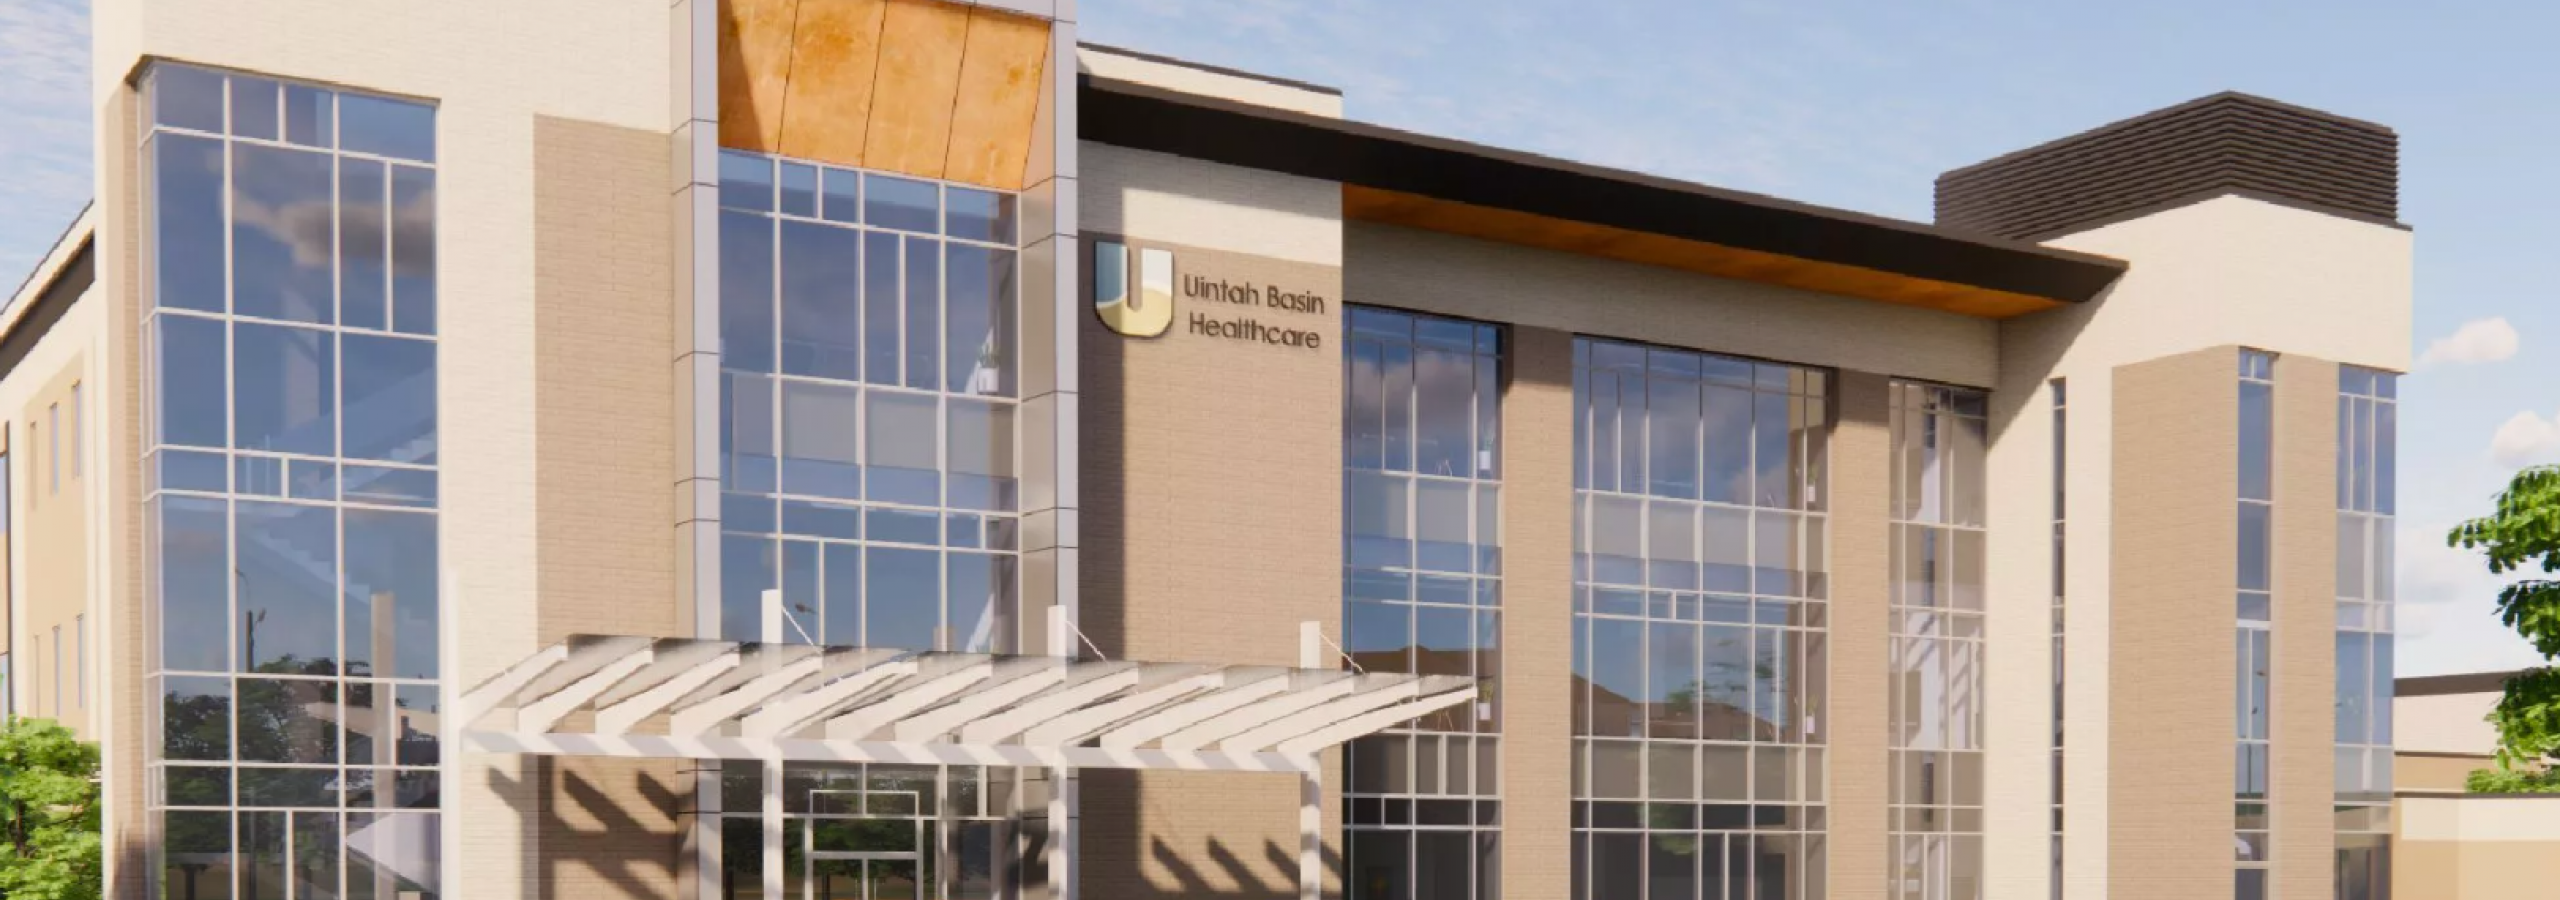 photo of Uintah Basin Healthcare center